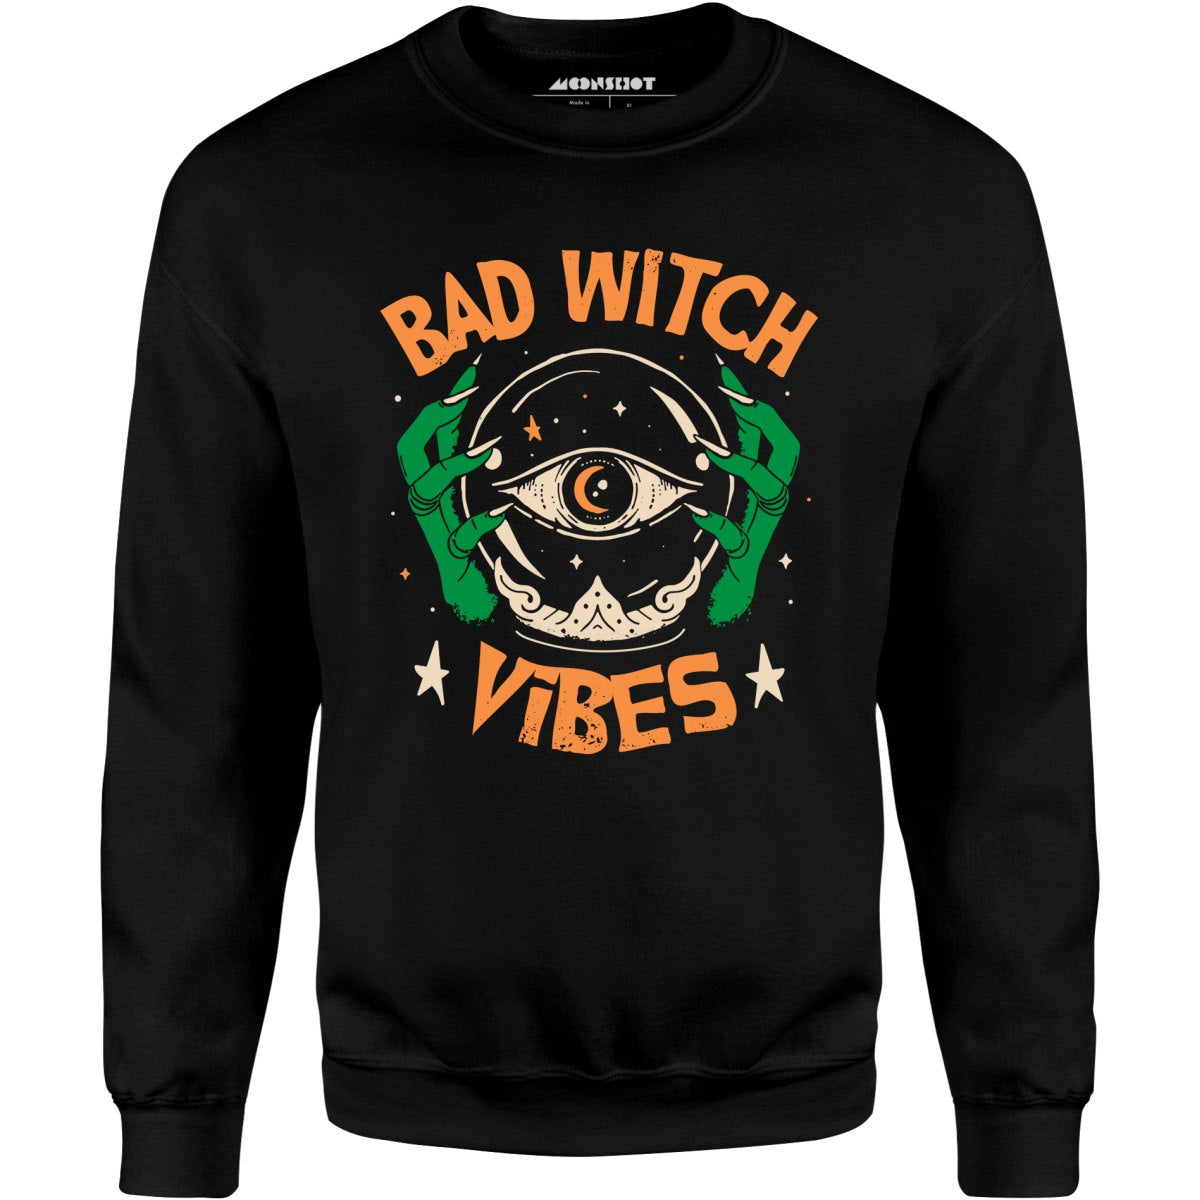 Bad Witch Vibes - Unisex Sweatshirt